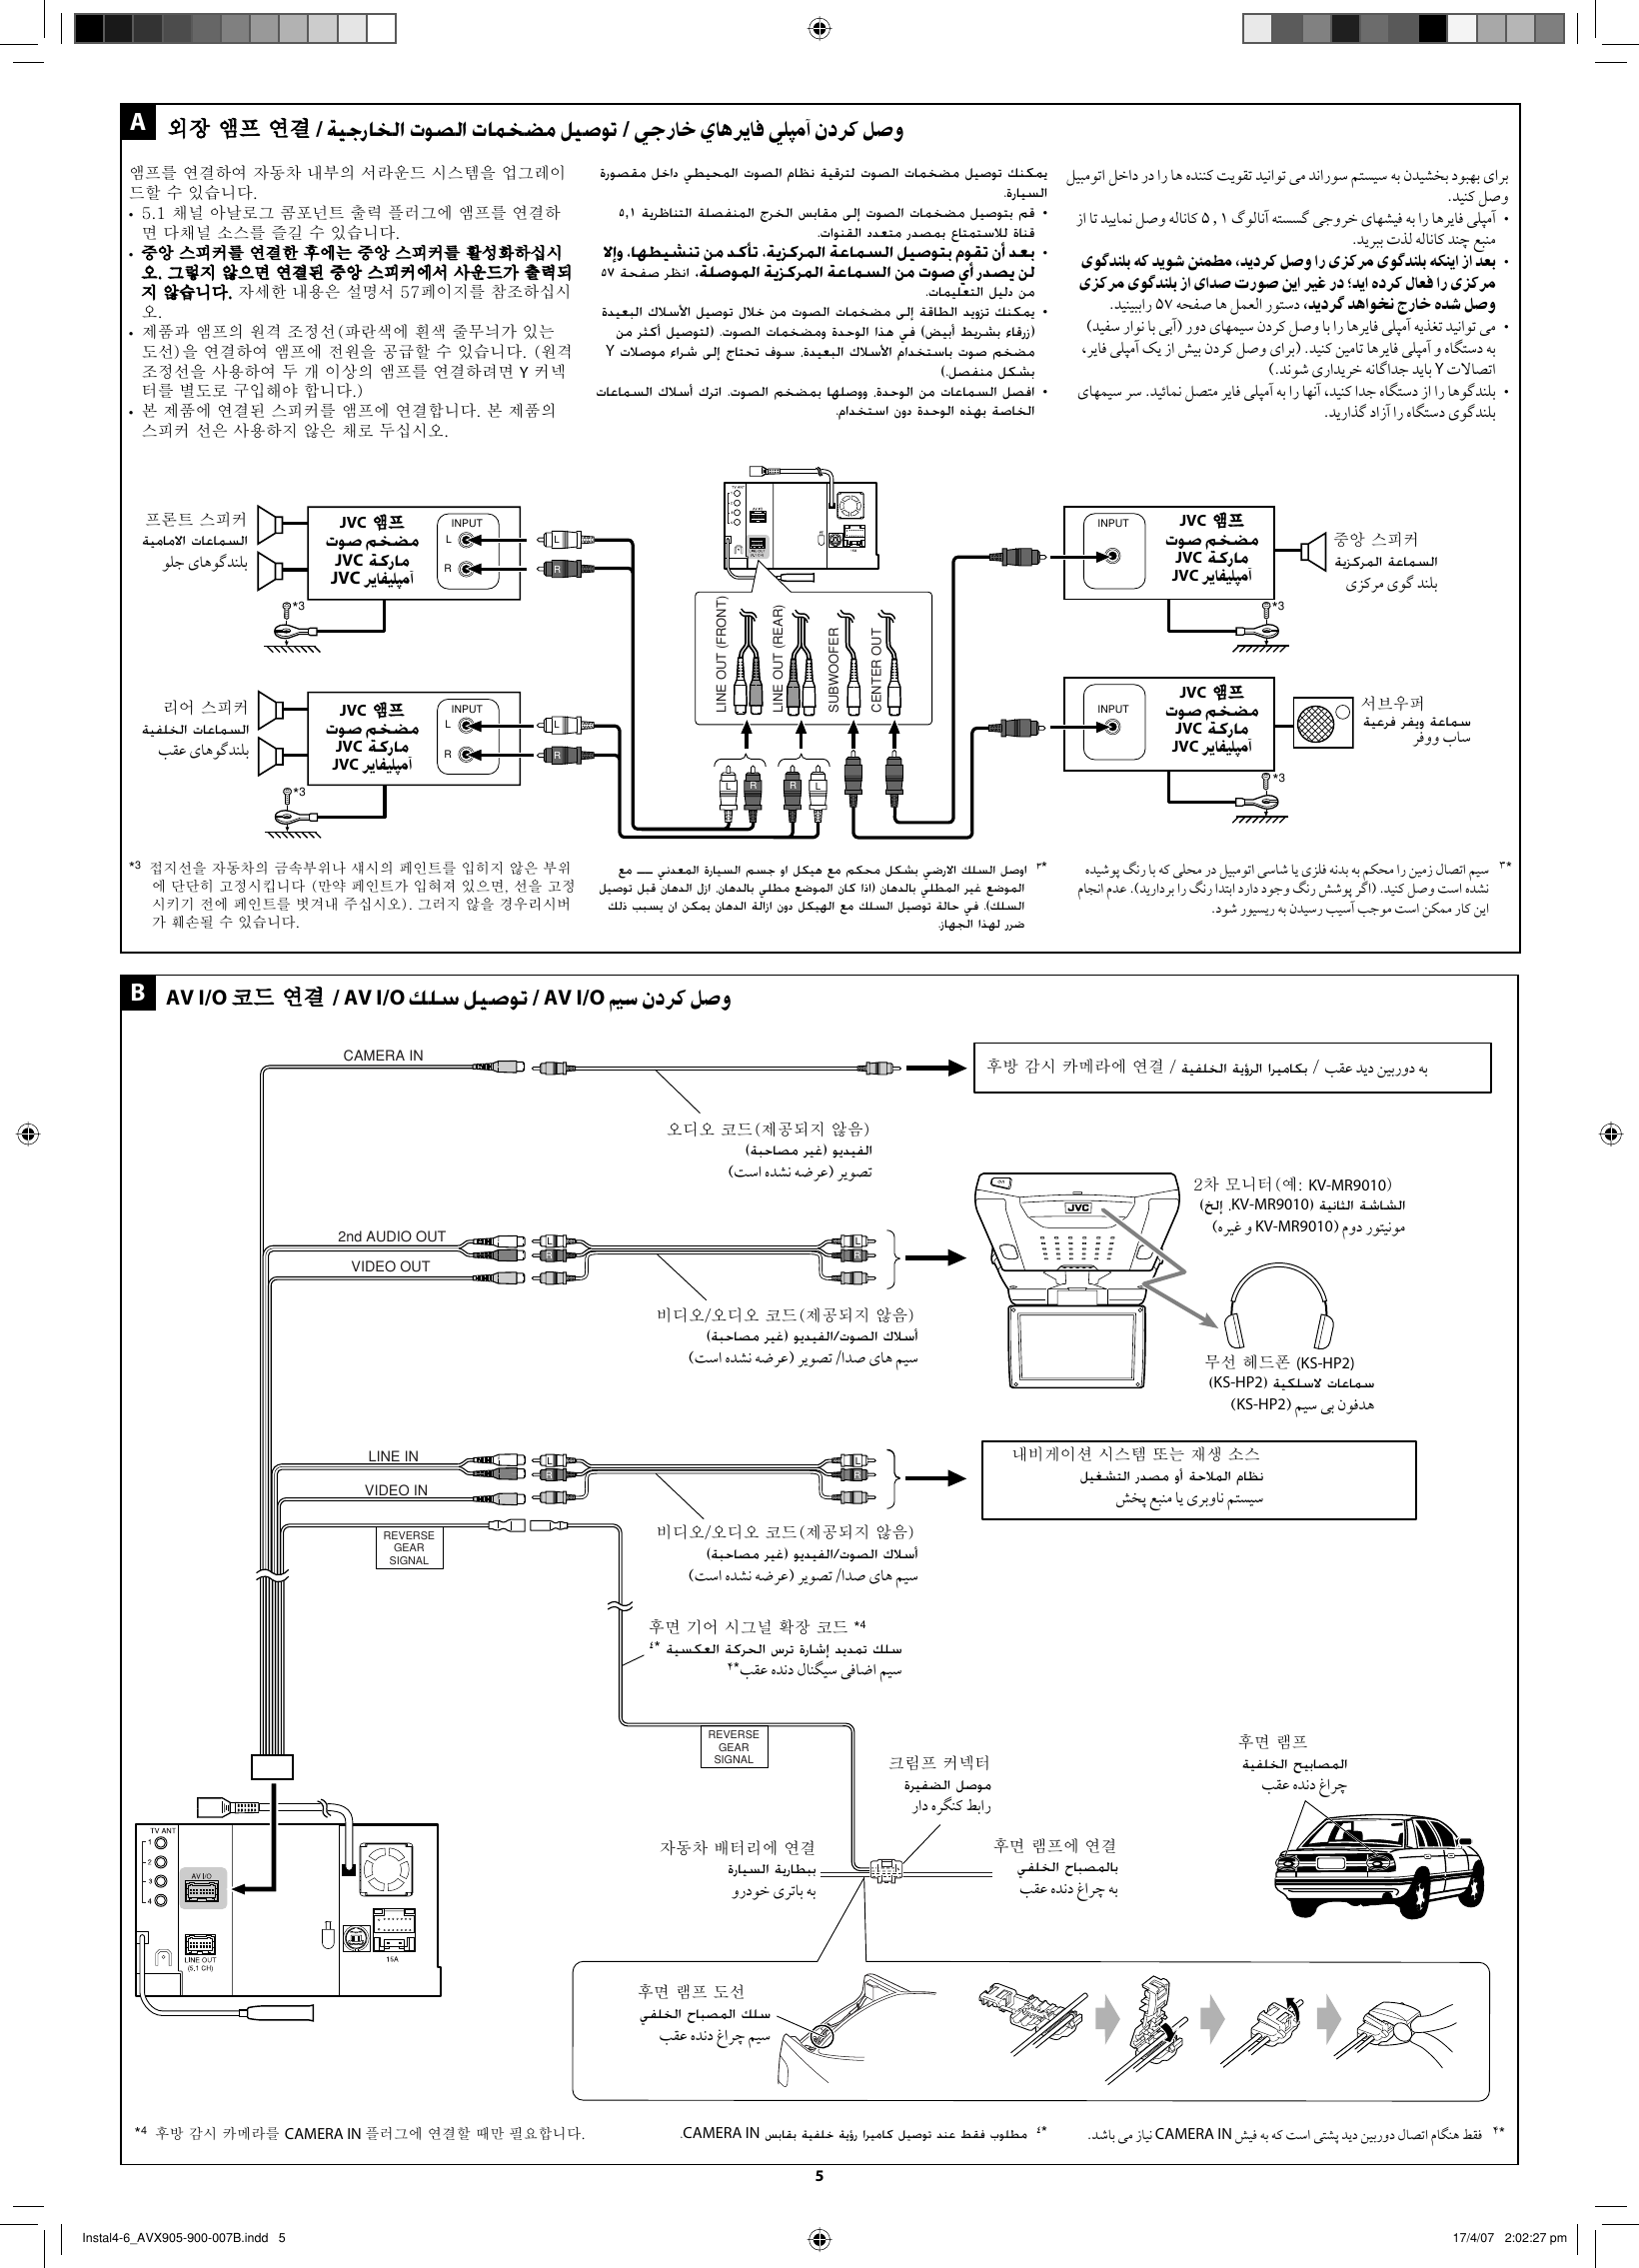 Page 5 of 6 - JVC KW-AVX900U KW-AVX905/KW-AVX900[U] User Manual INSTALLATION (Asia) LVT1670-007B